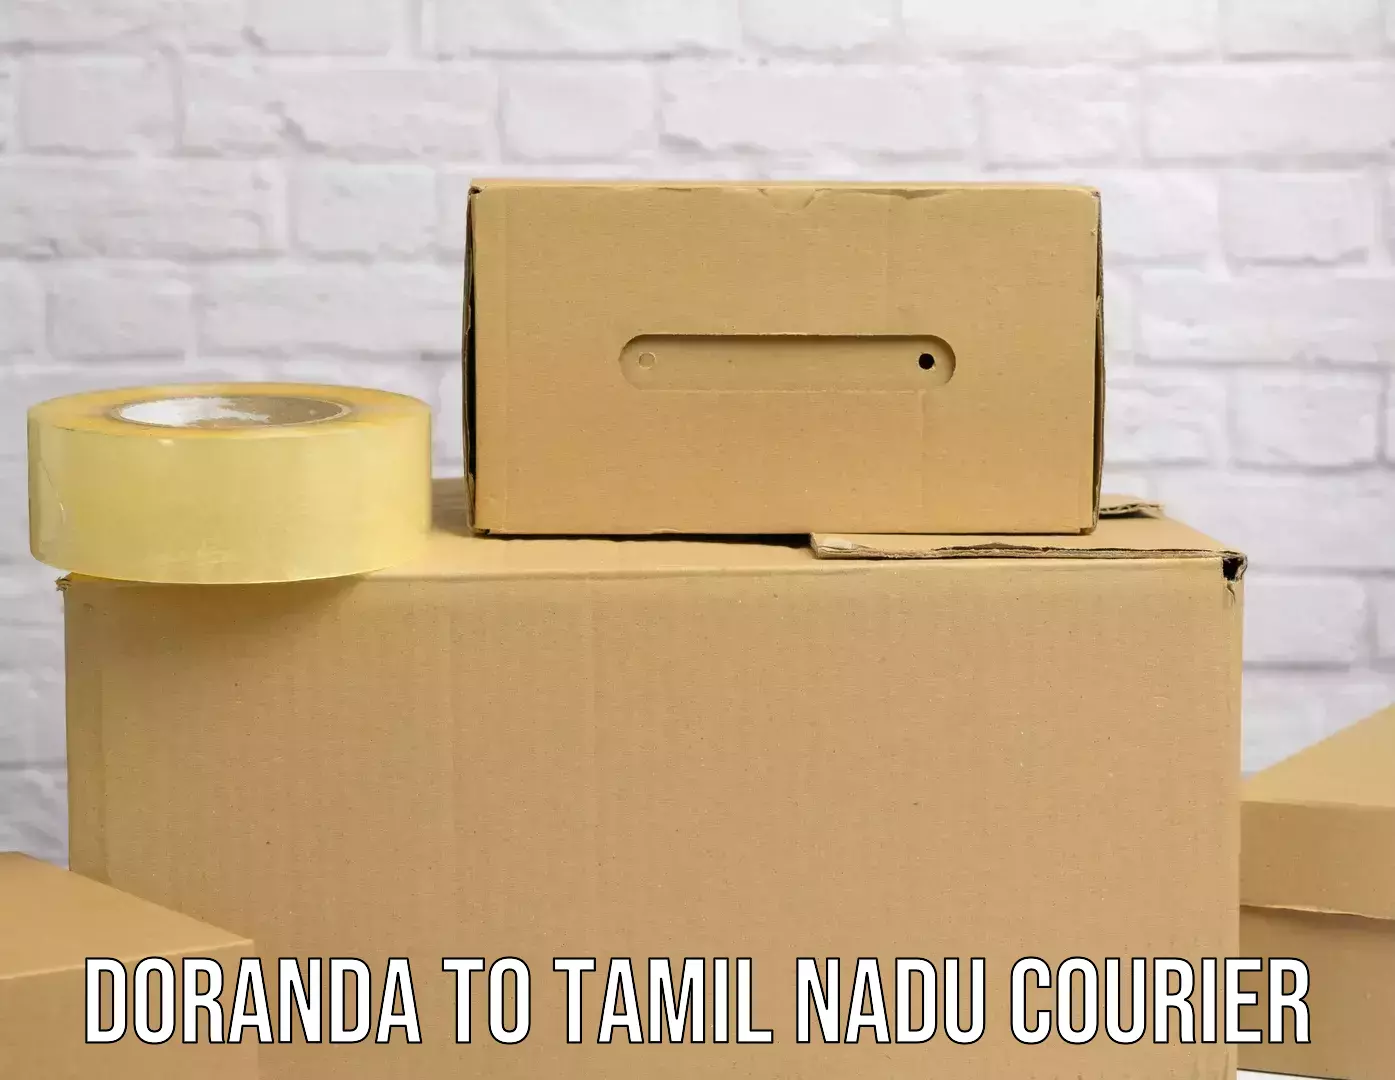 User-friendly courier app Doranda to Tamil Nadu